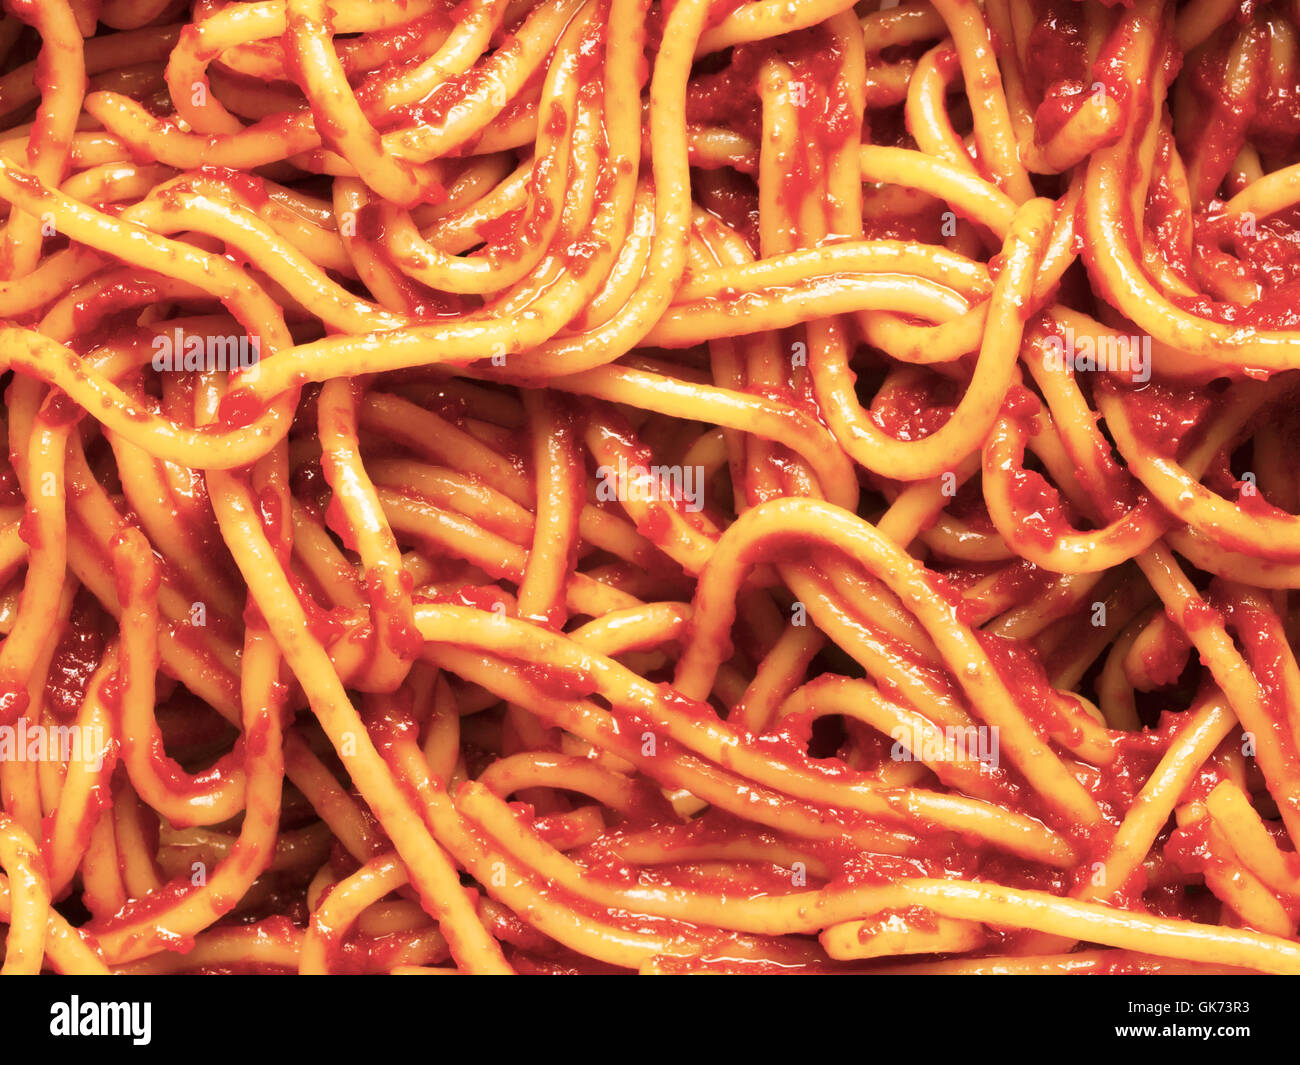 kitchen cuisine spaghetti Stock Photo